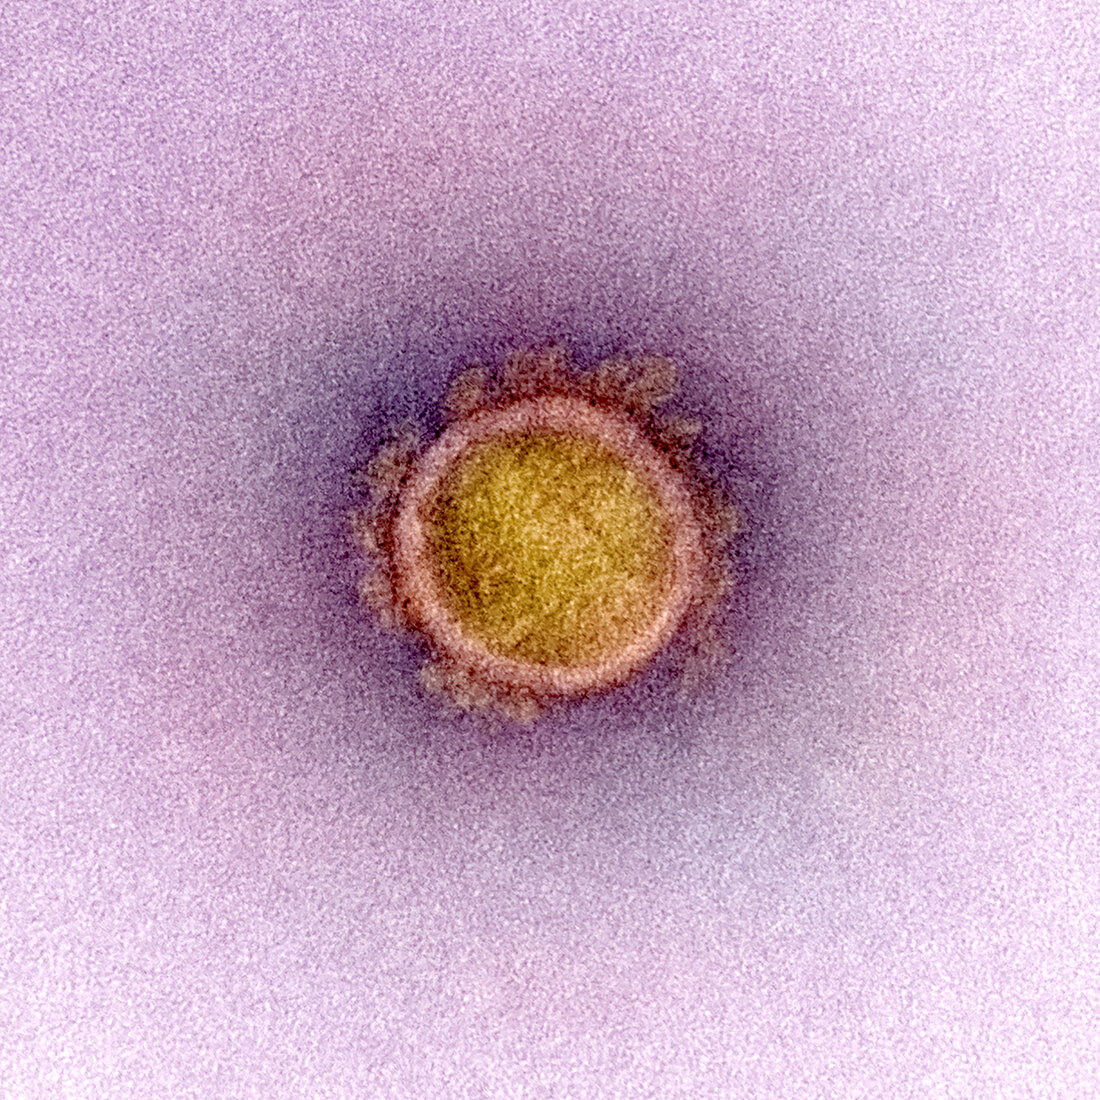 Covid-19 coronavirus virus particle, TEM